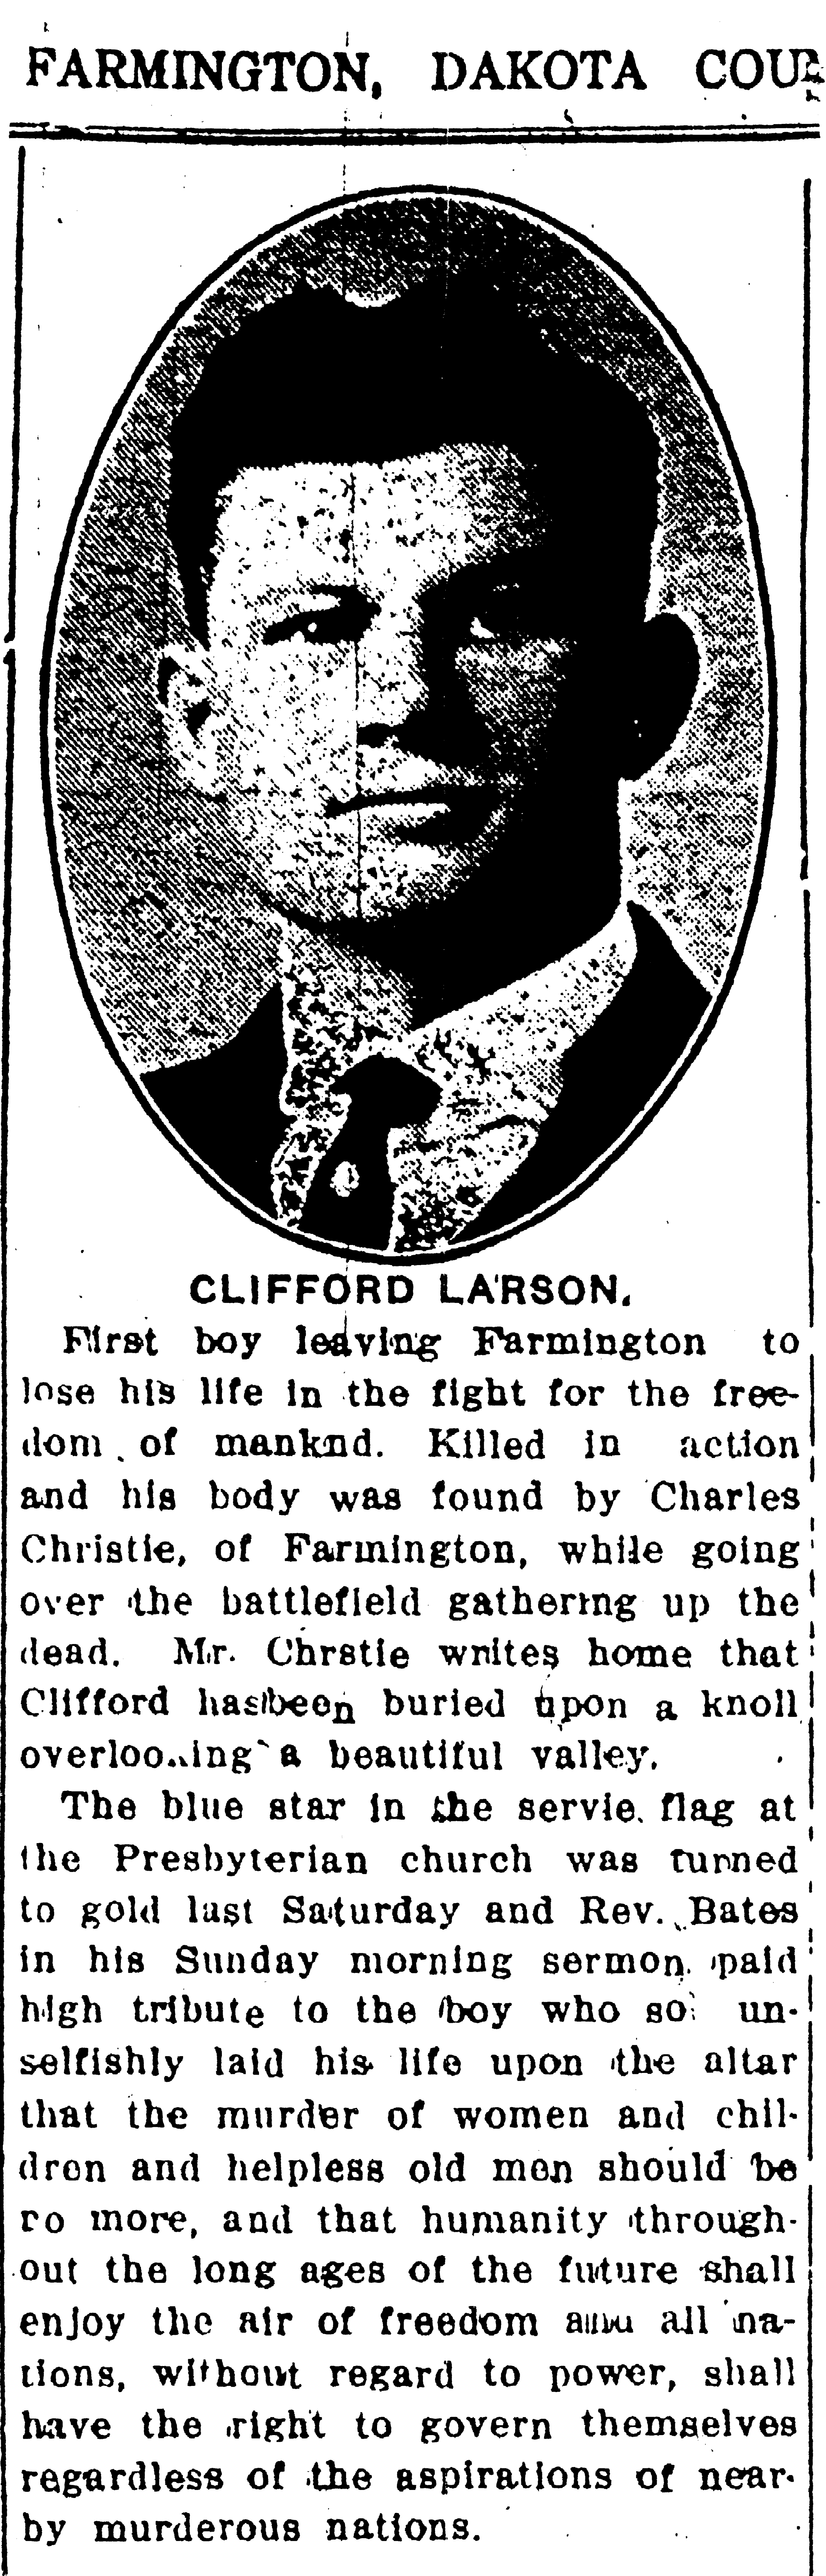 ARMY PVT. CLIFFORD G. LARSON